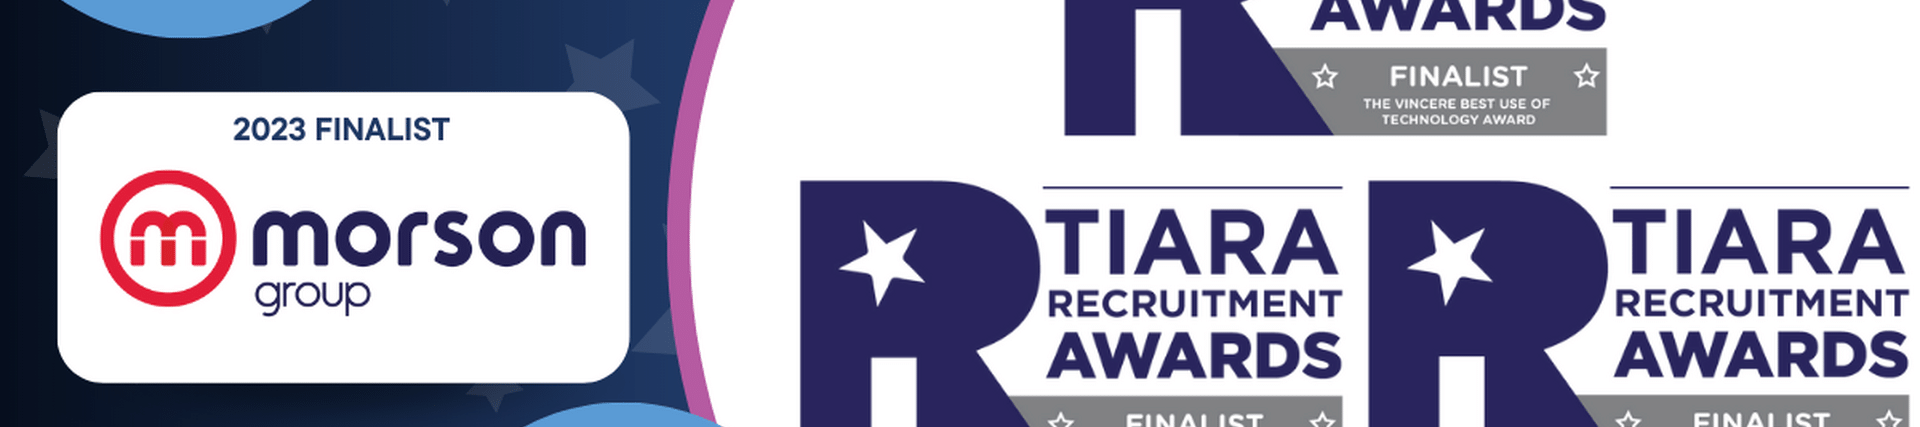 TIARA Award Nominations